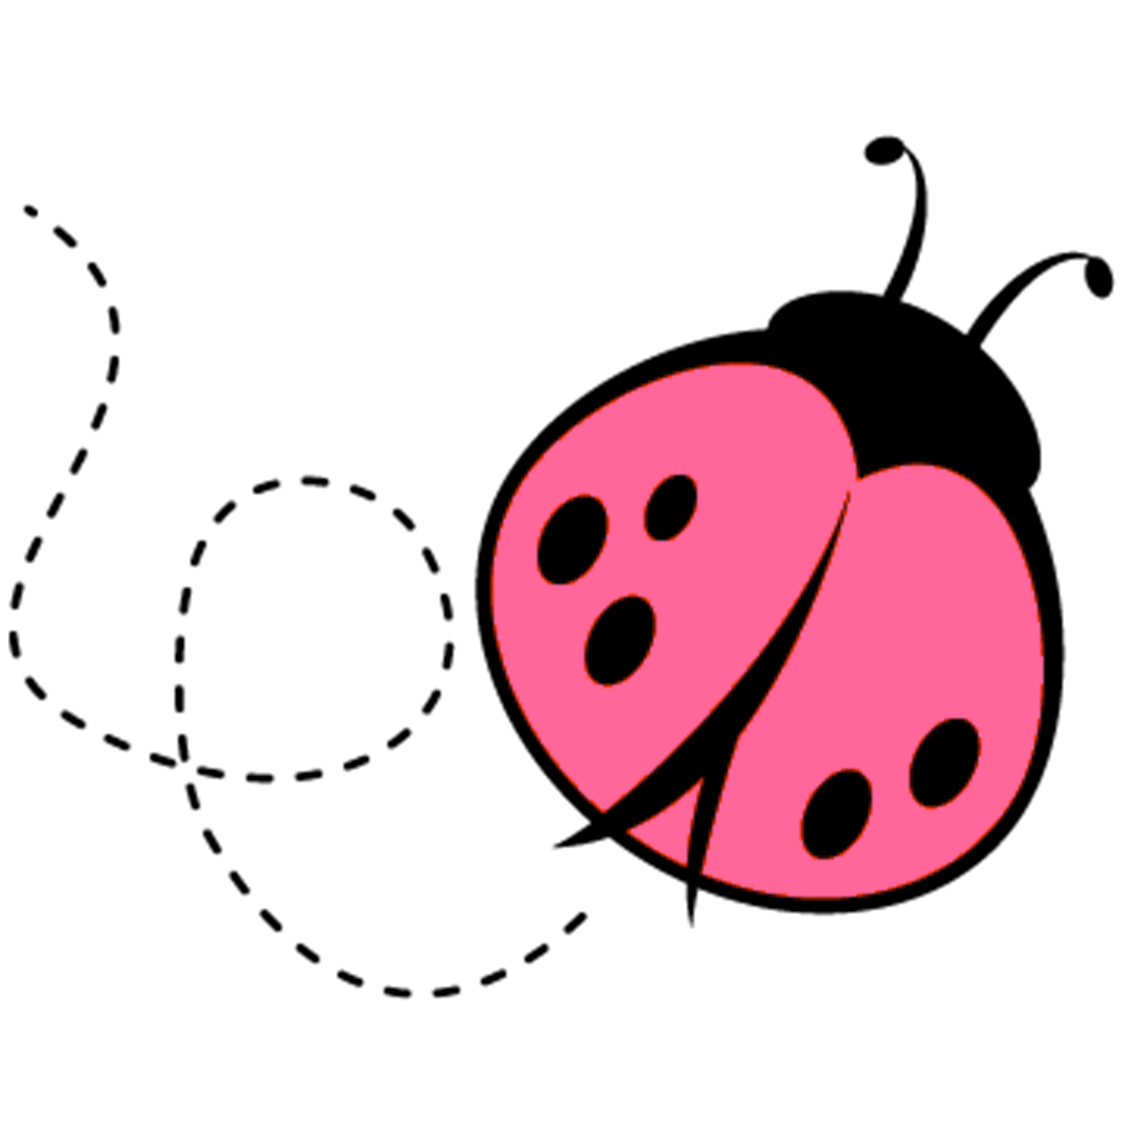 ladybug clipart, ladybug pink flower clipart panda clipart images